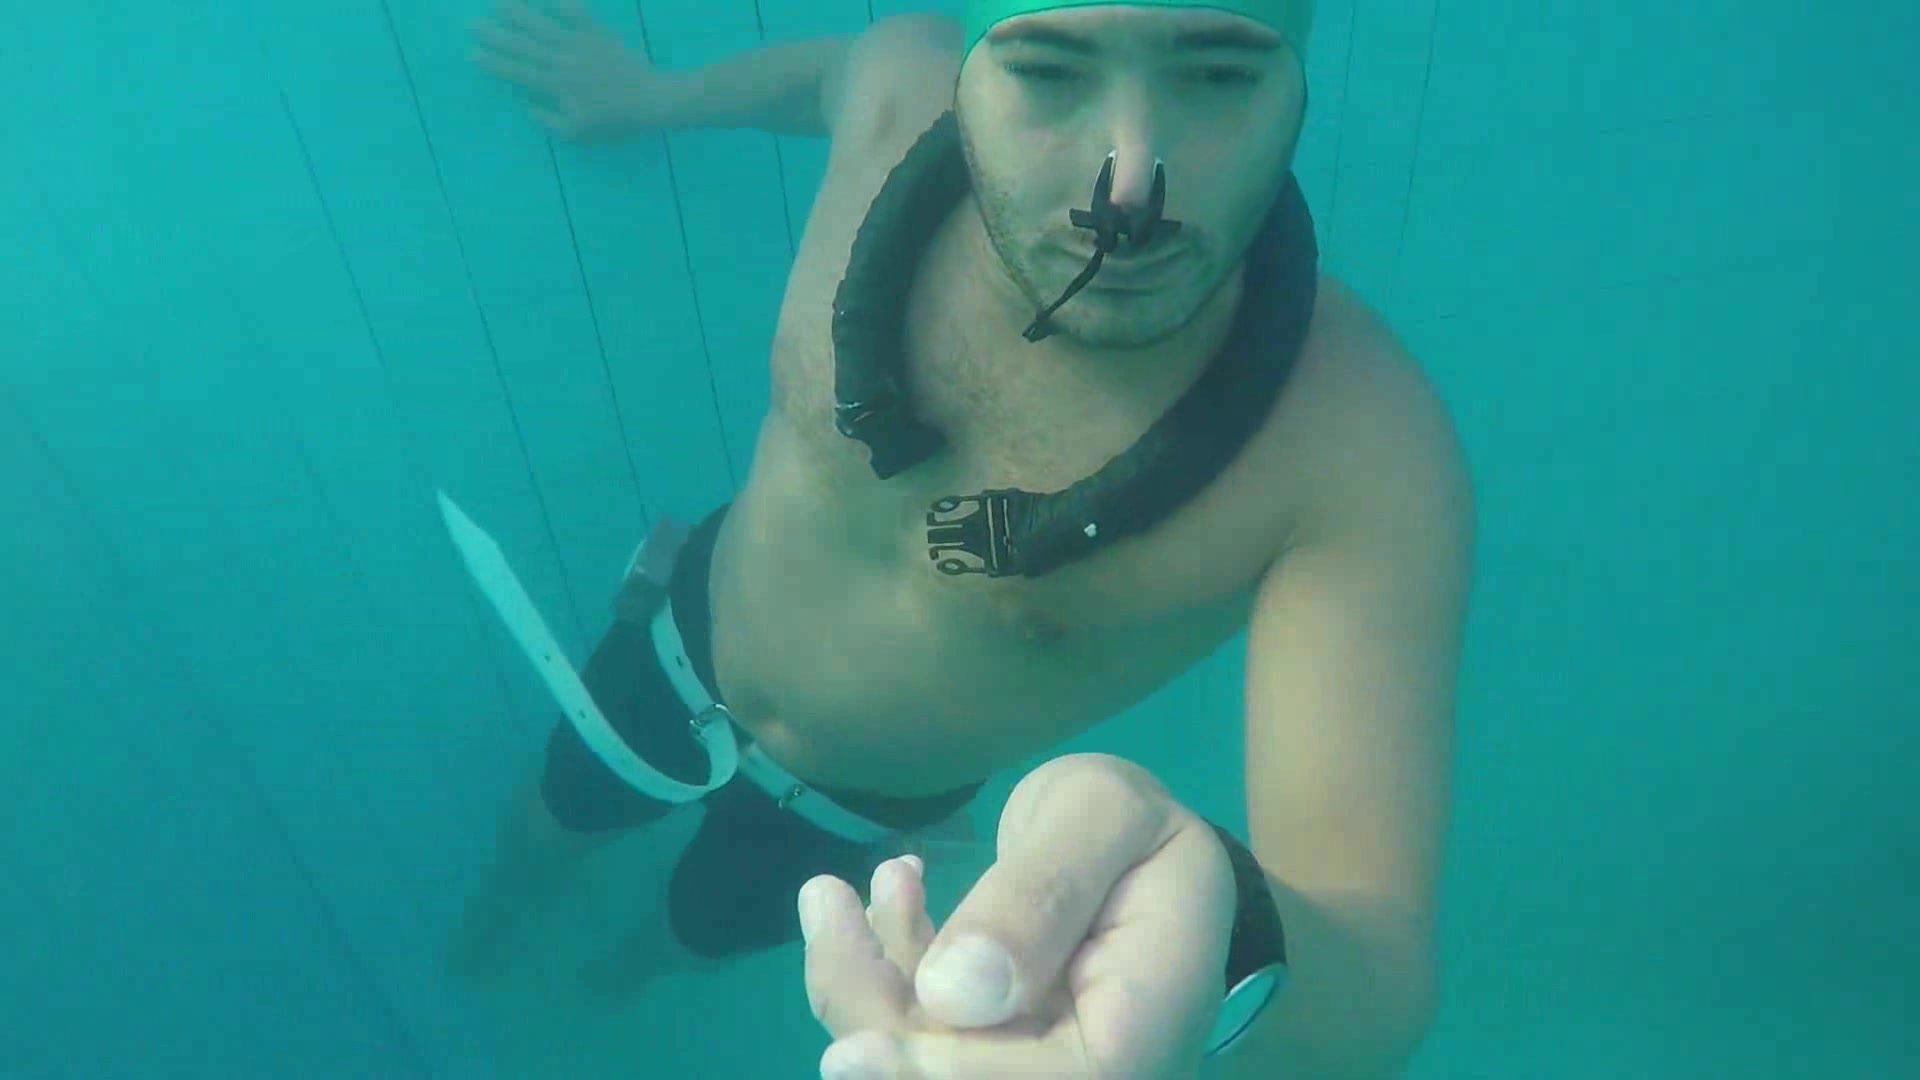 Barefaced Kareem underwater with swimcap & noseclip